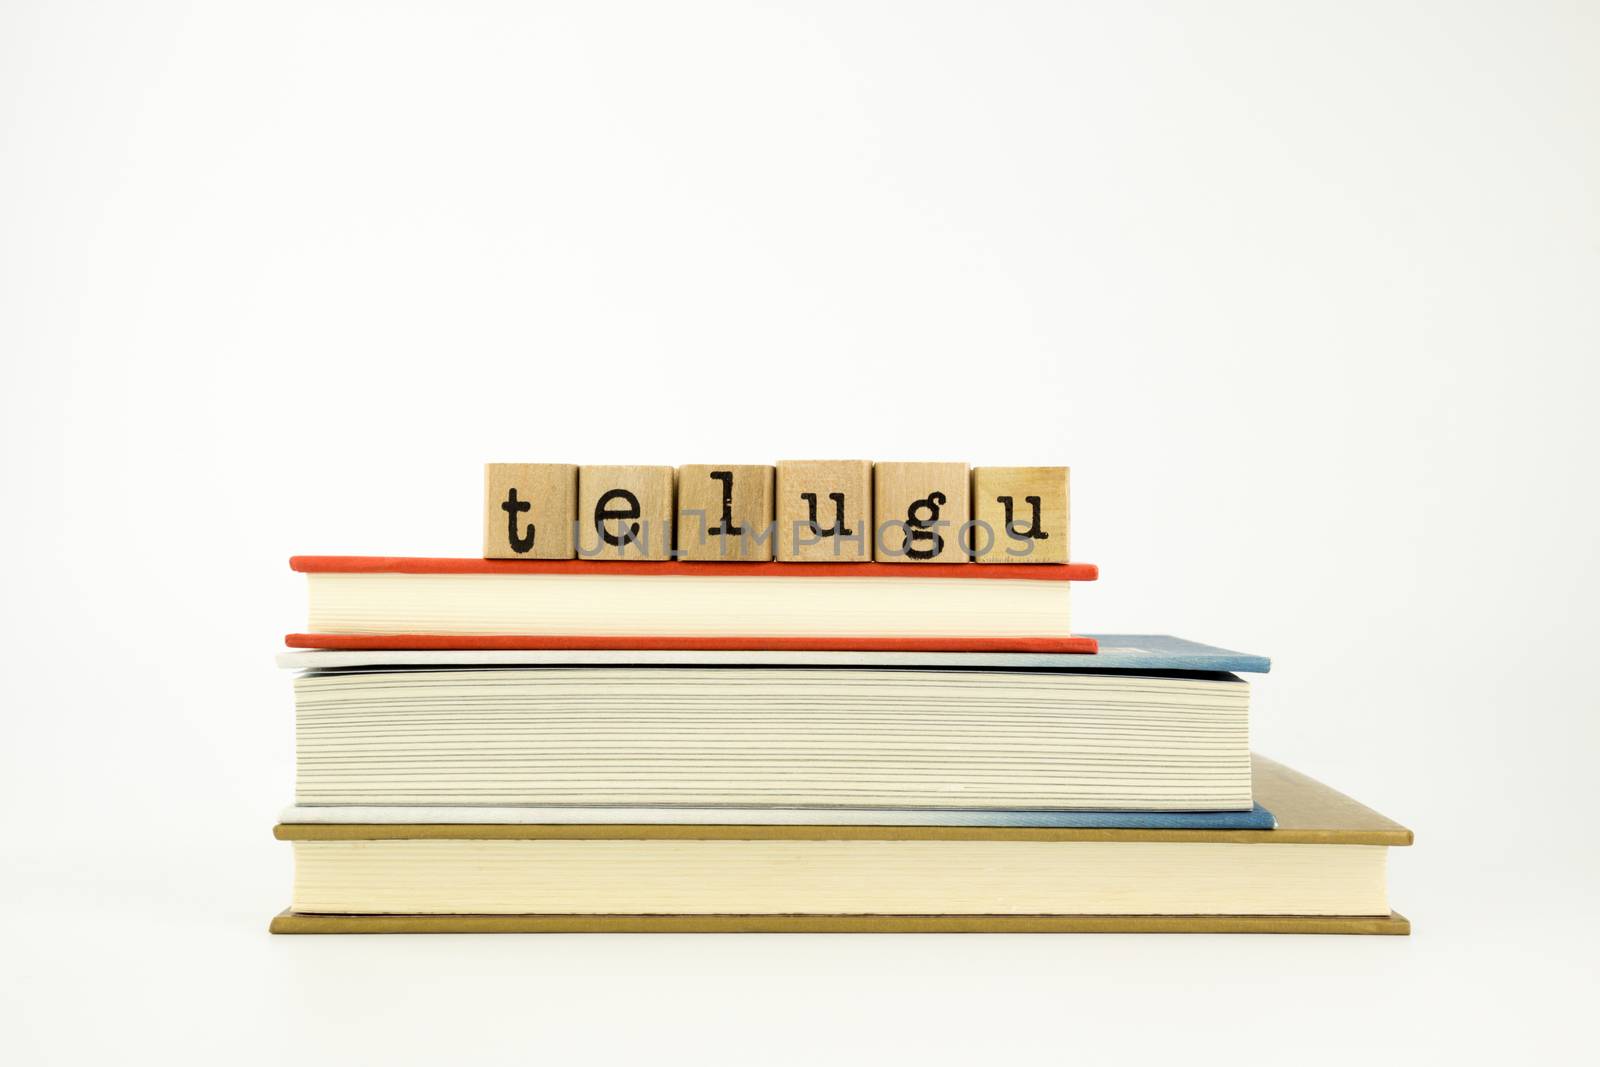 telugu language word on wood stamps and books by vinnstock